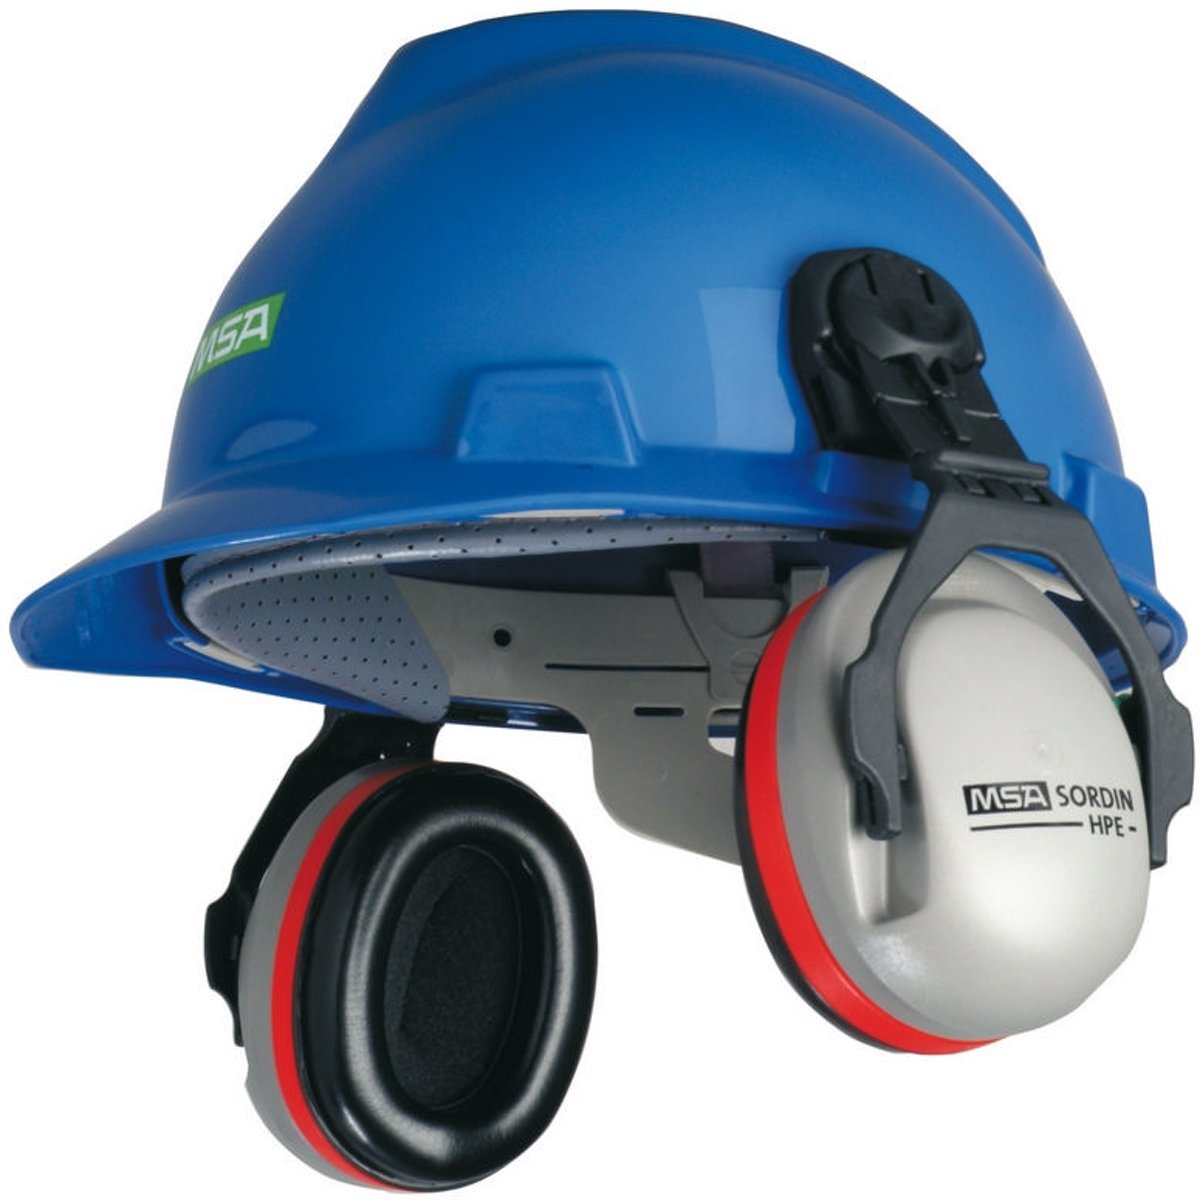  Coquilles anti-bruit SOR12012 pour casque V-GUARD 200 